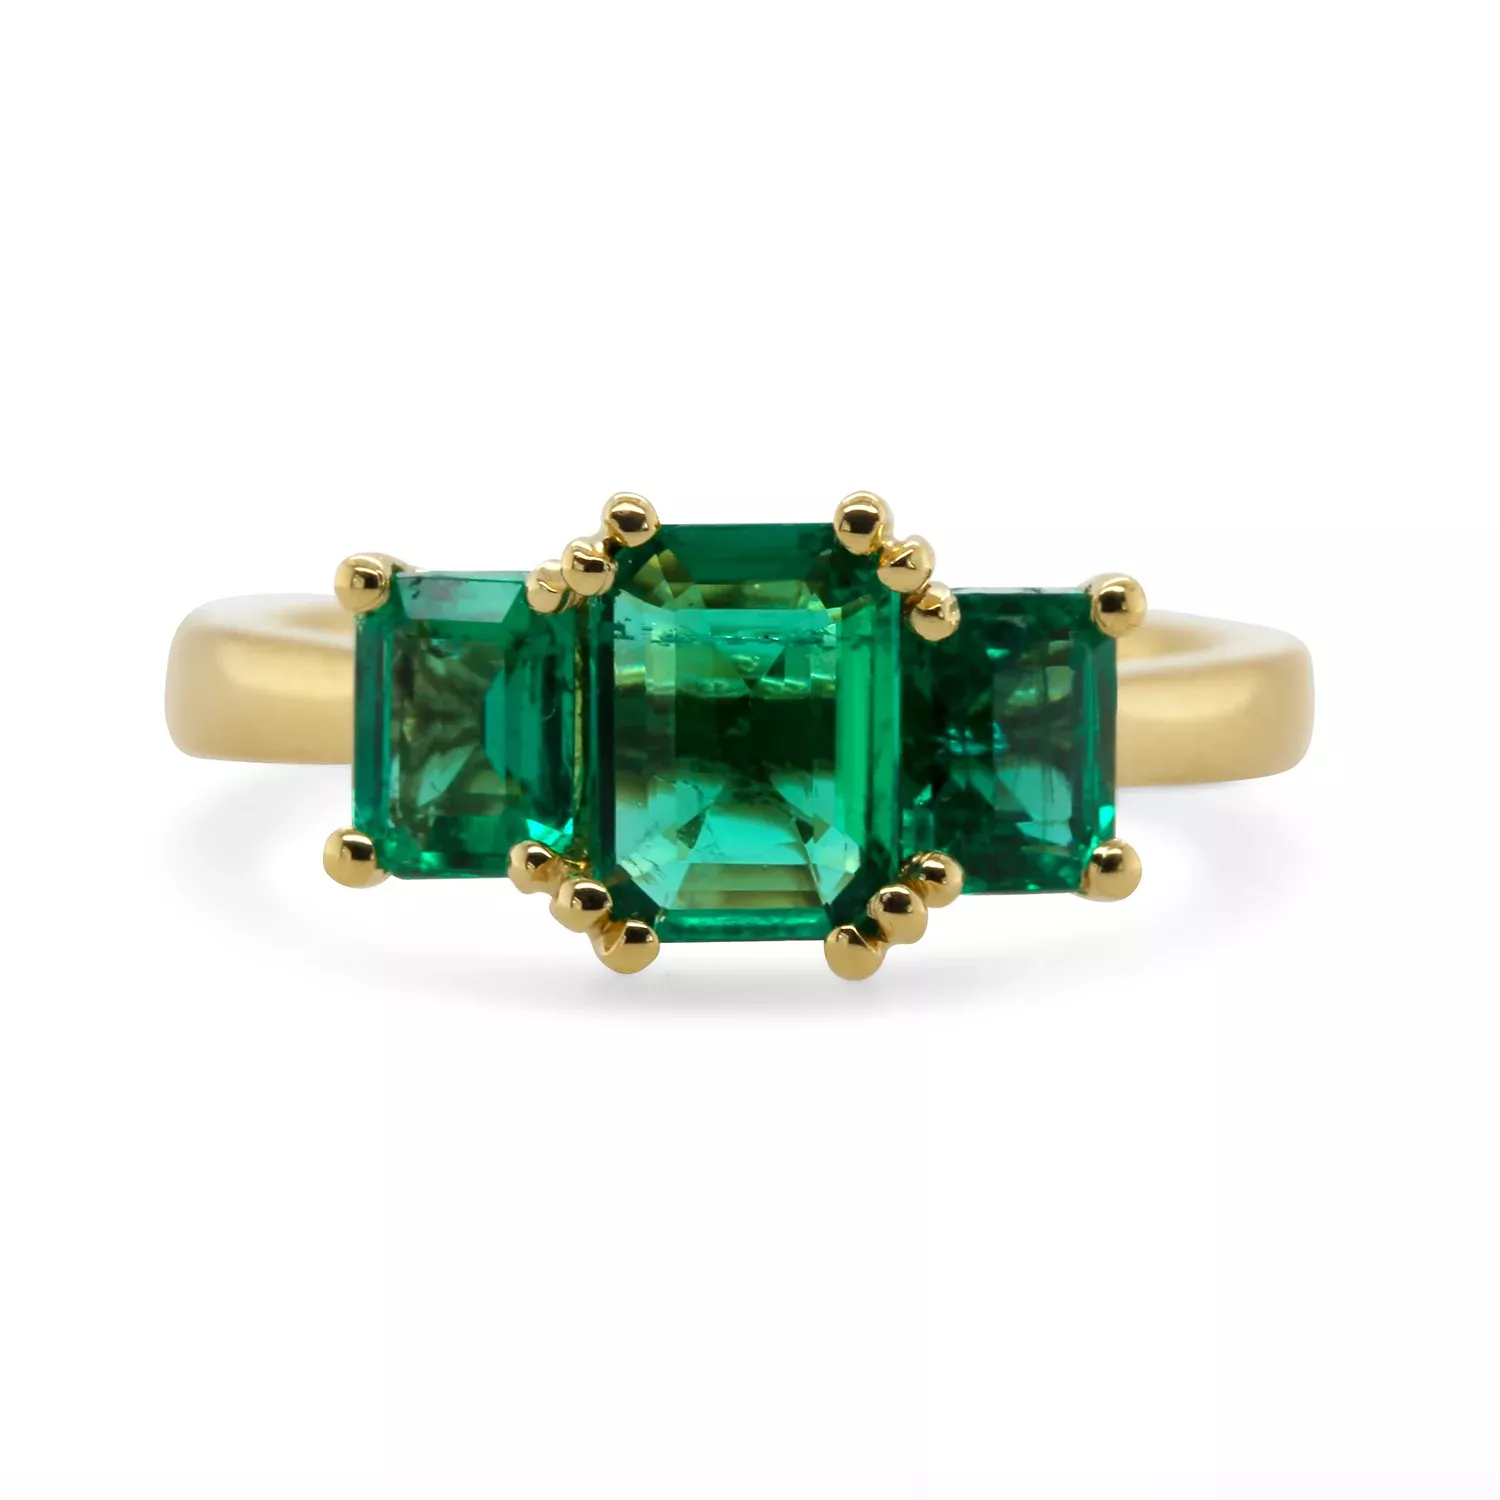 ronan campbell 18k yellow gold green emerald trilogia engagement ring designyard cotemporary jewellery gallery dublin ireland